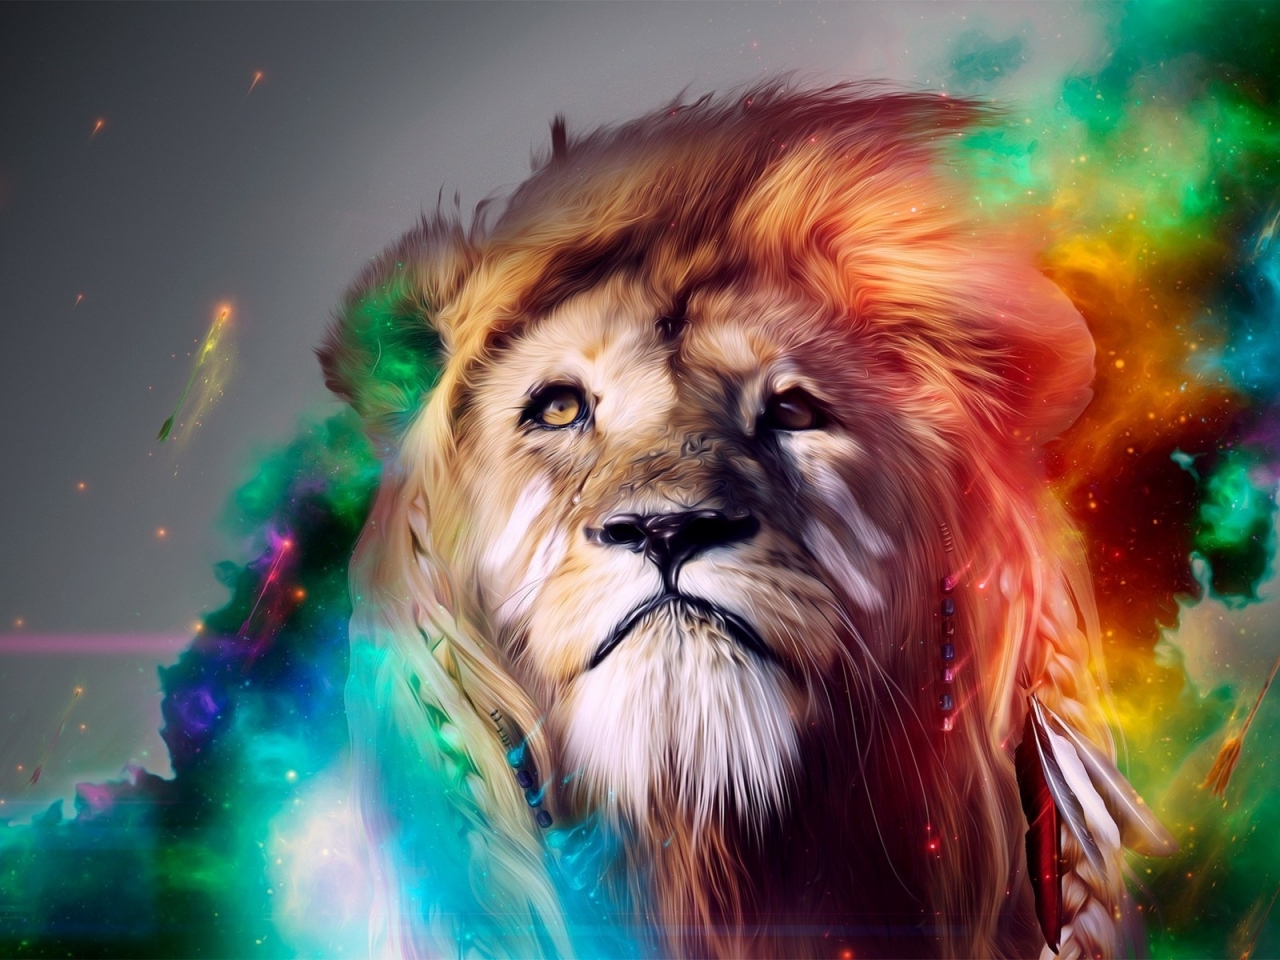 Rainbow Lion for 1280 x 960 resolution